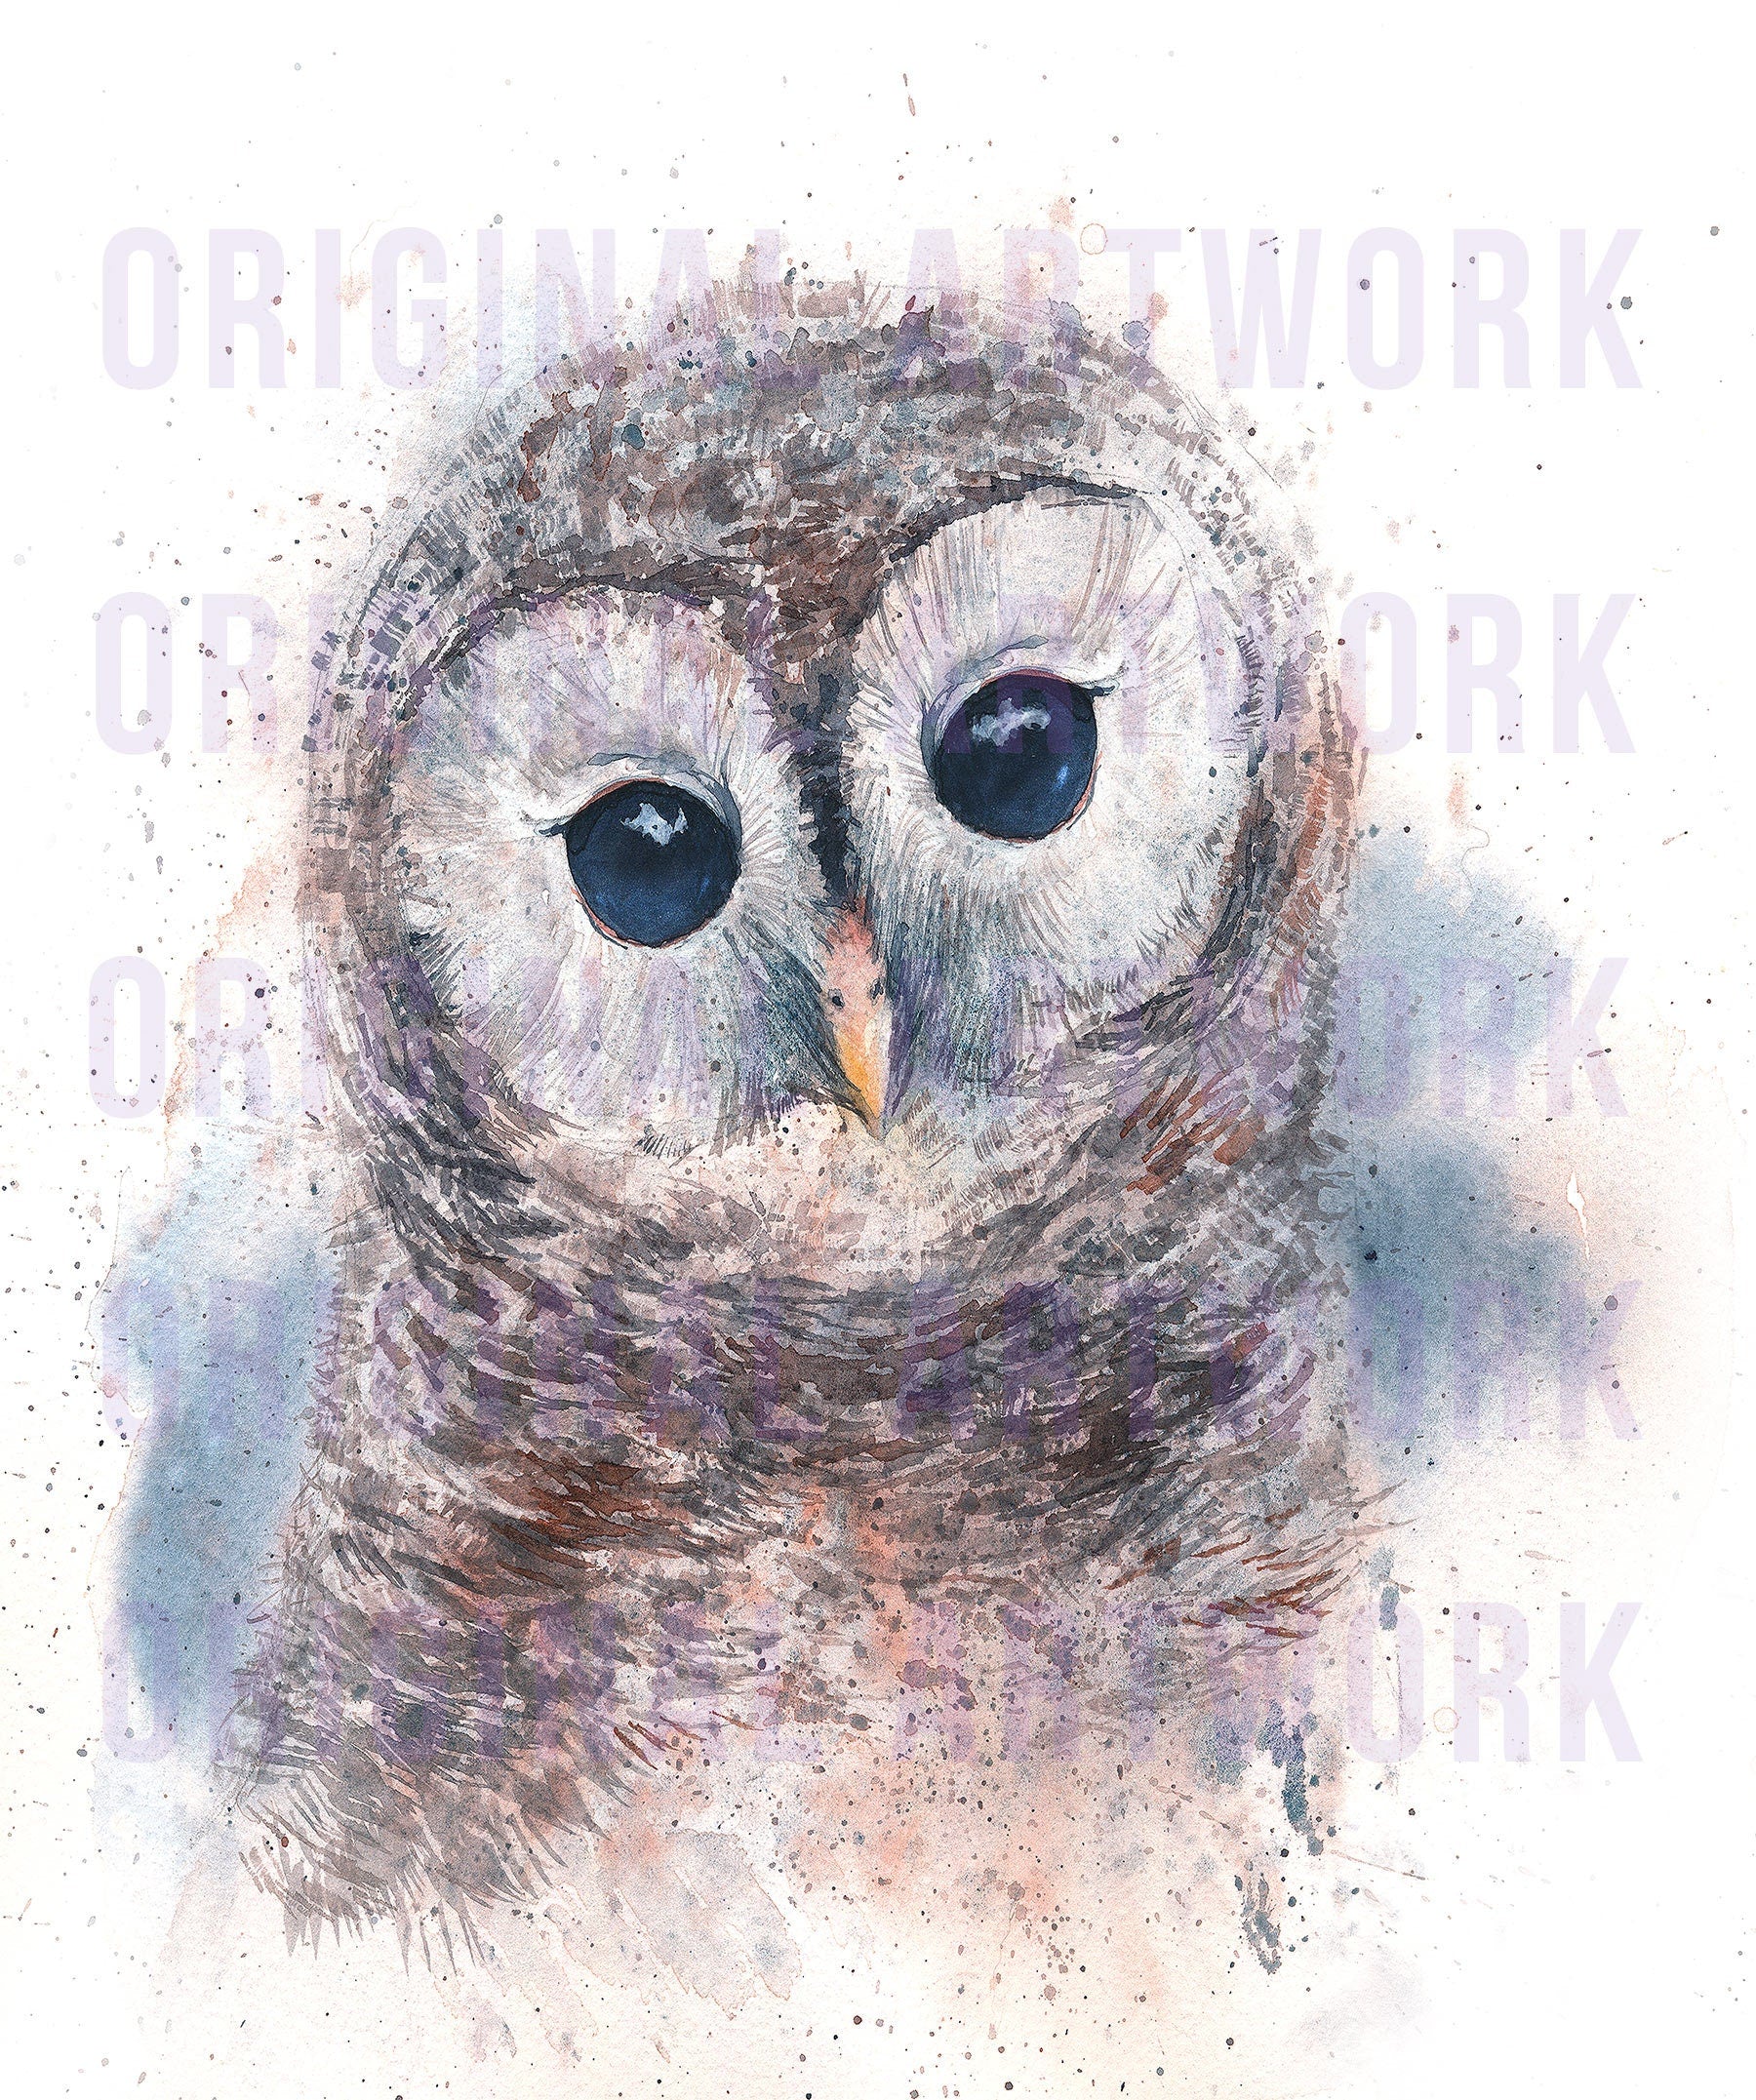 Baby Owl Print,Woodland Nursery Wall Art, Baby Owl Decor, Woodland Baby Animal, Baby Owl Nursery Print, Baby Owl Wall Art, Nursery Owl Print